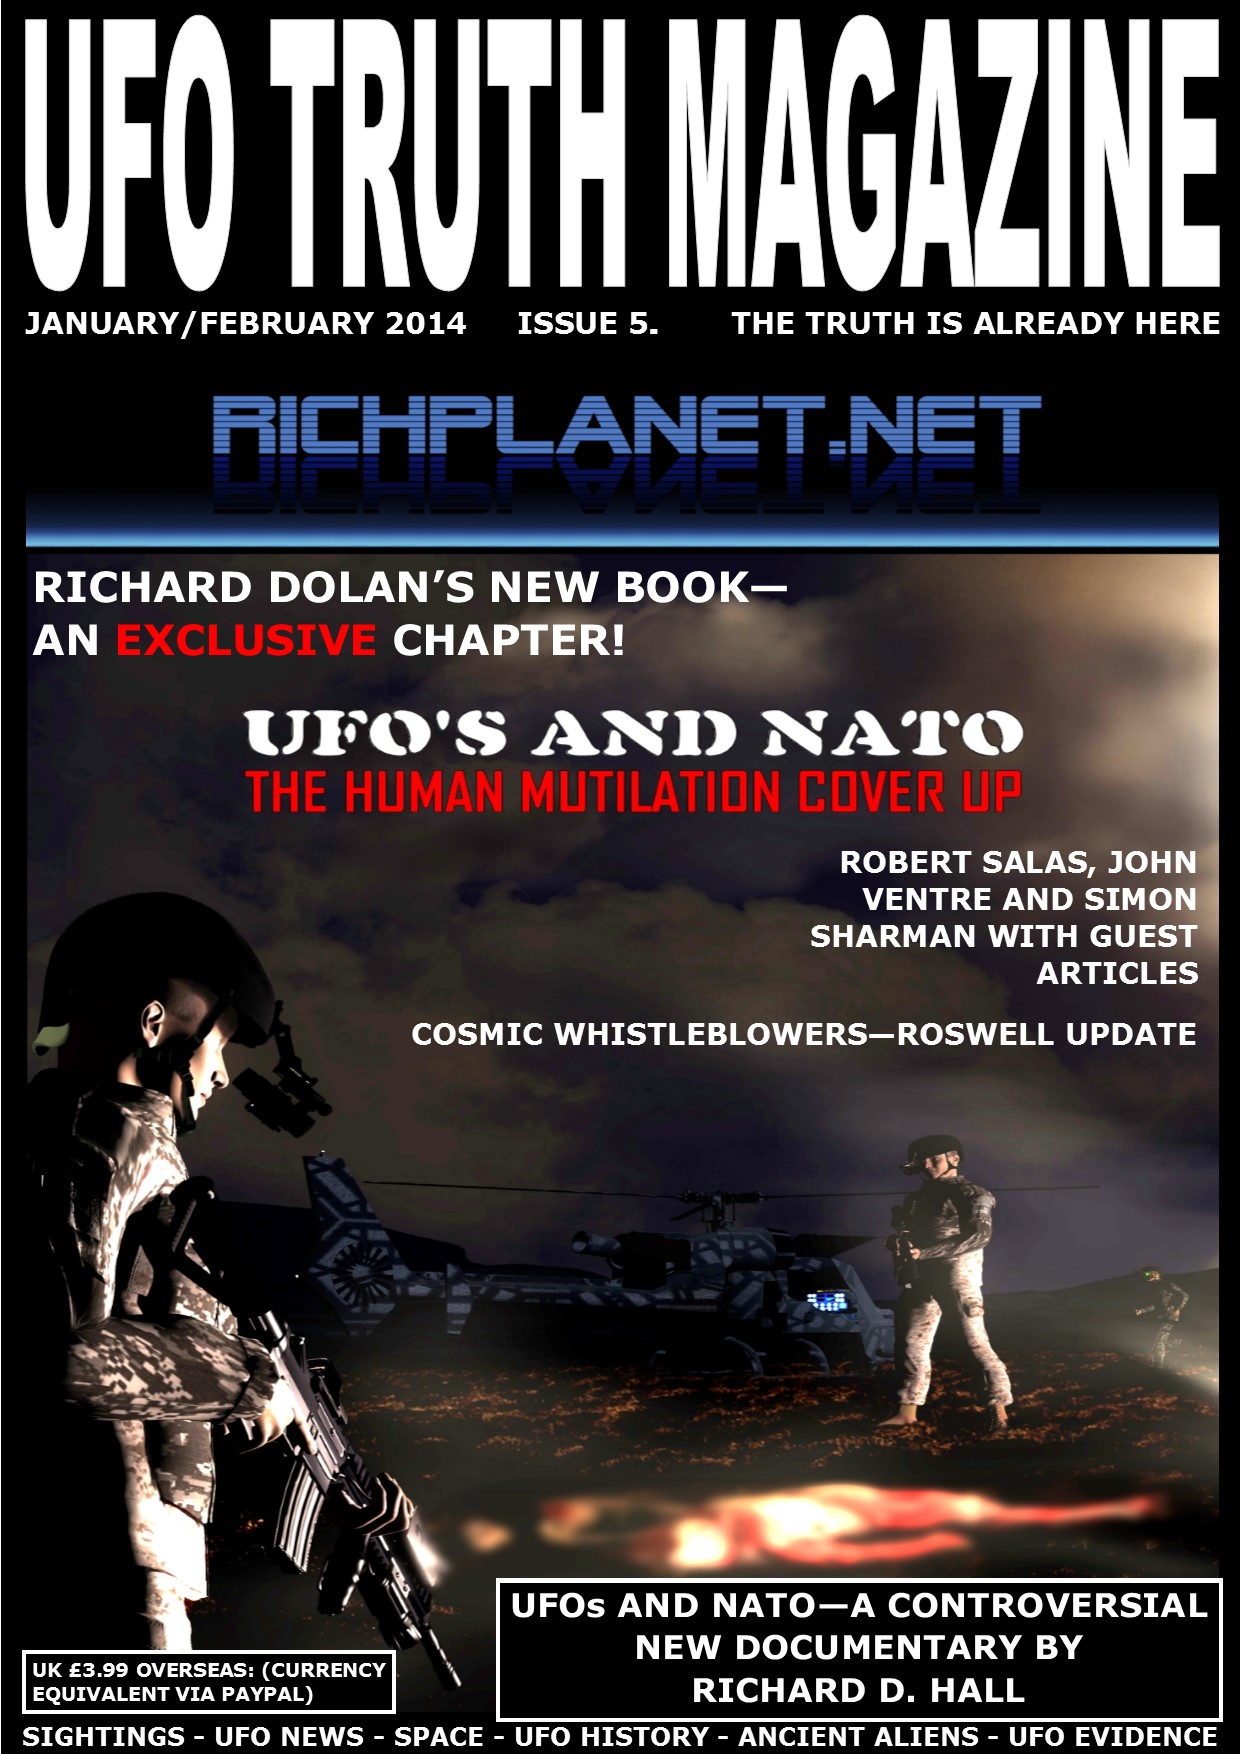 UFO TRUTH MAGAZINE ISSUE 5